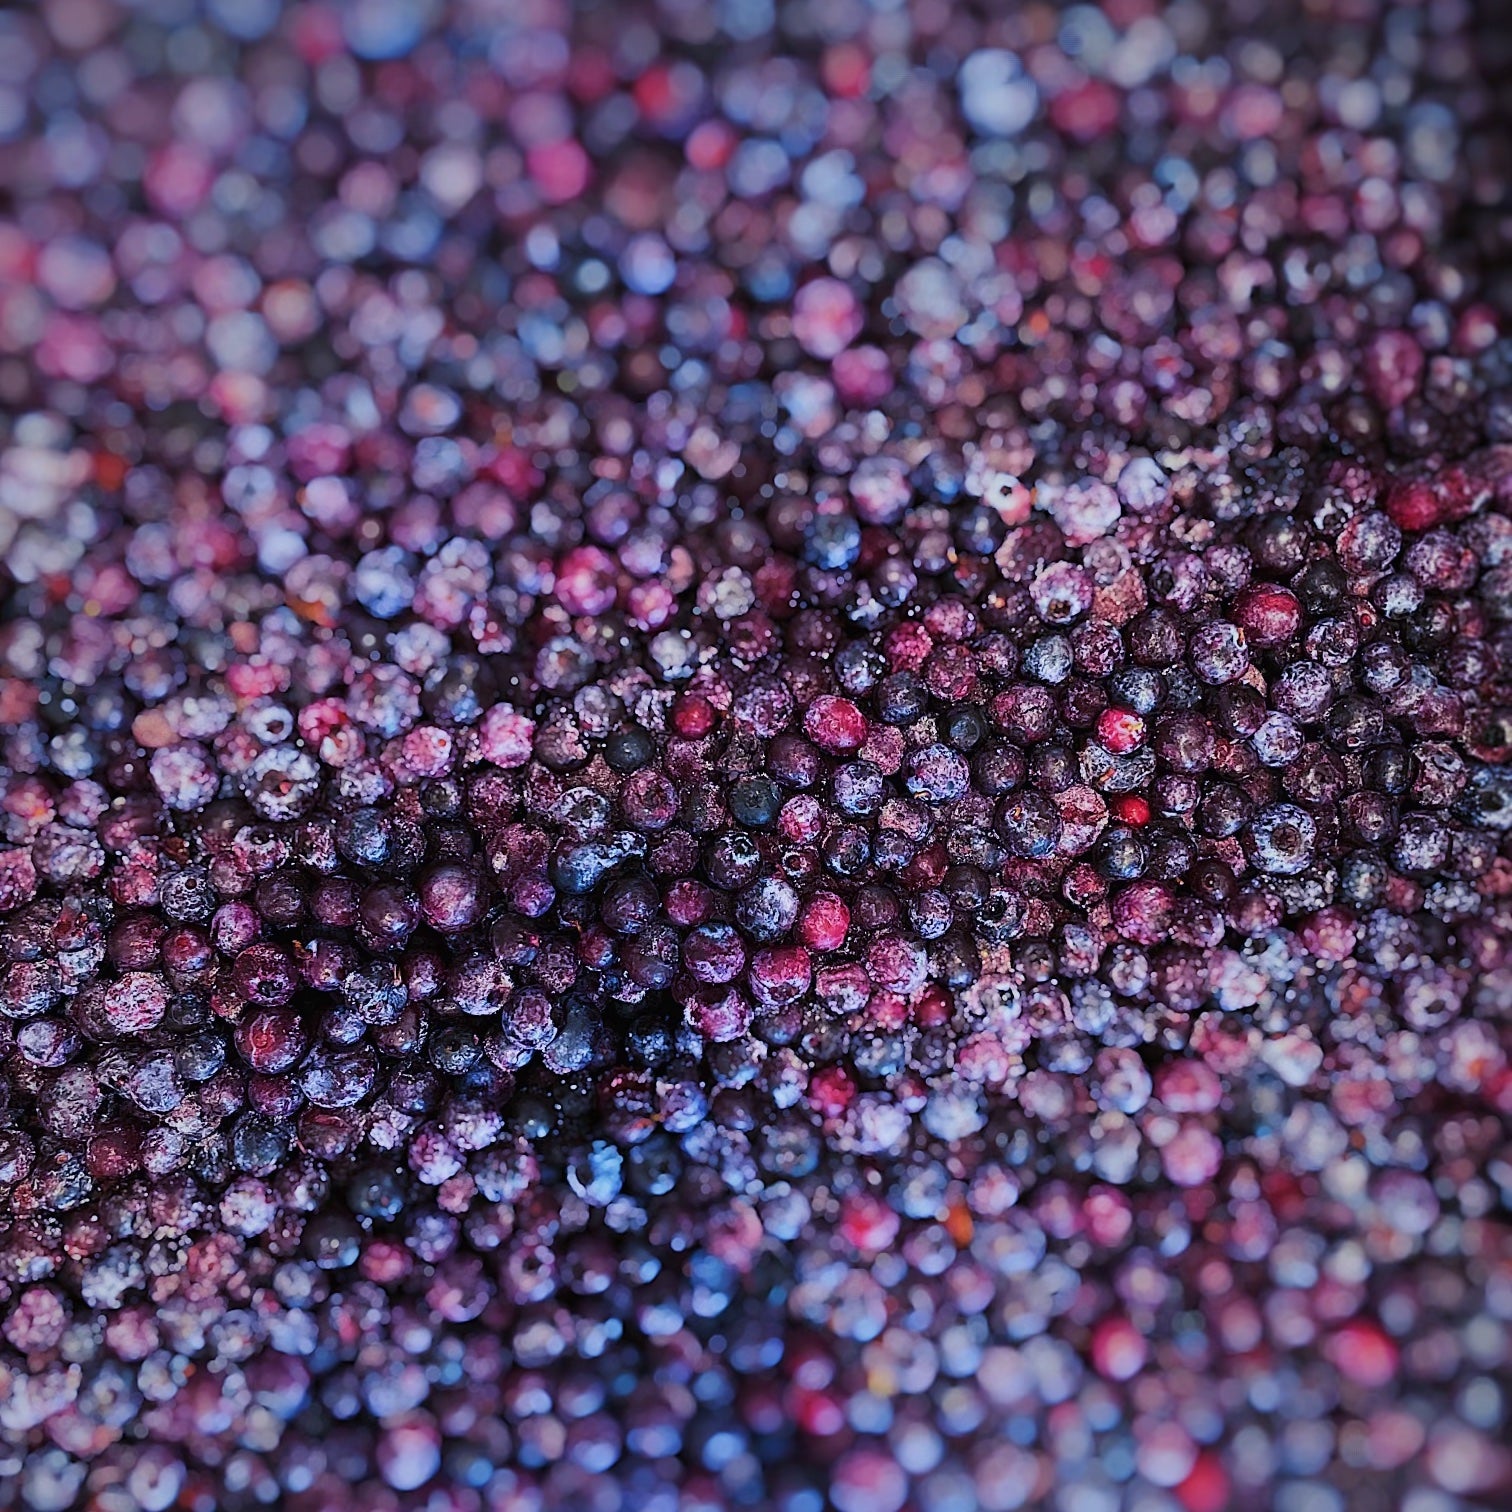 Zero Waste Product Highlight: Blueberries